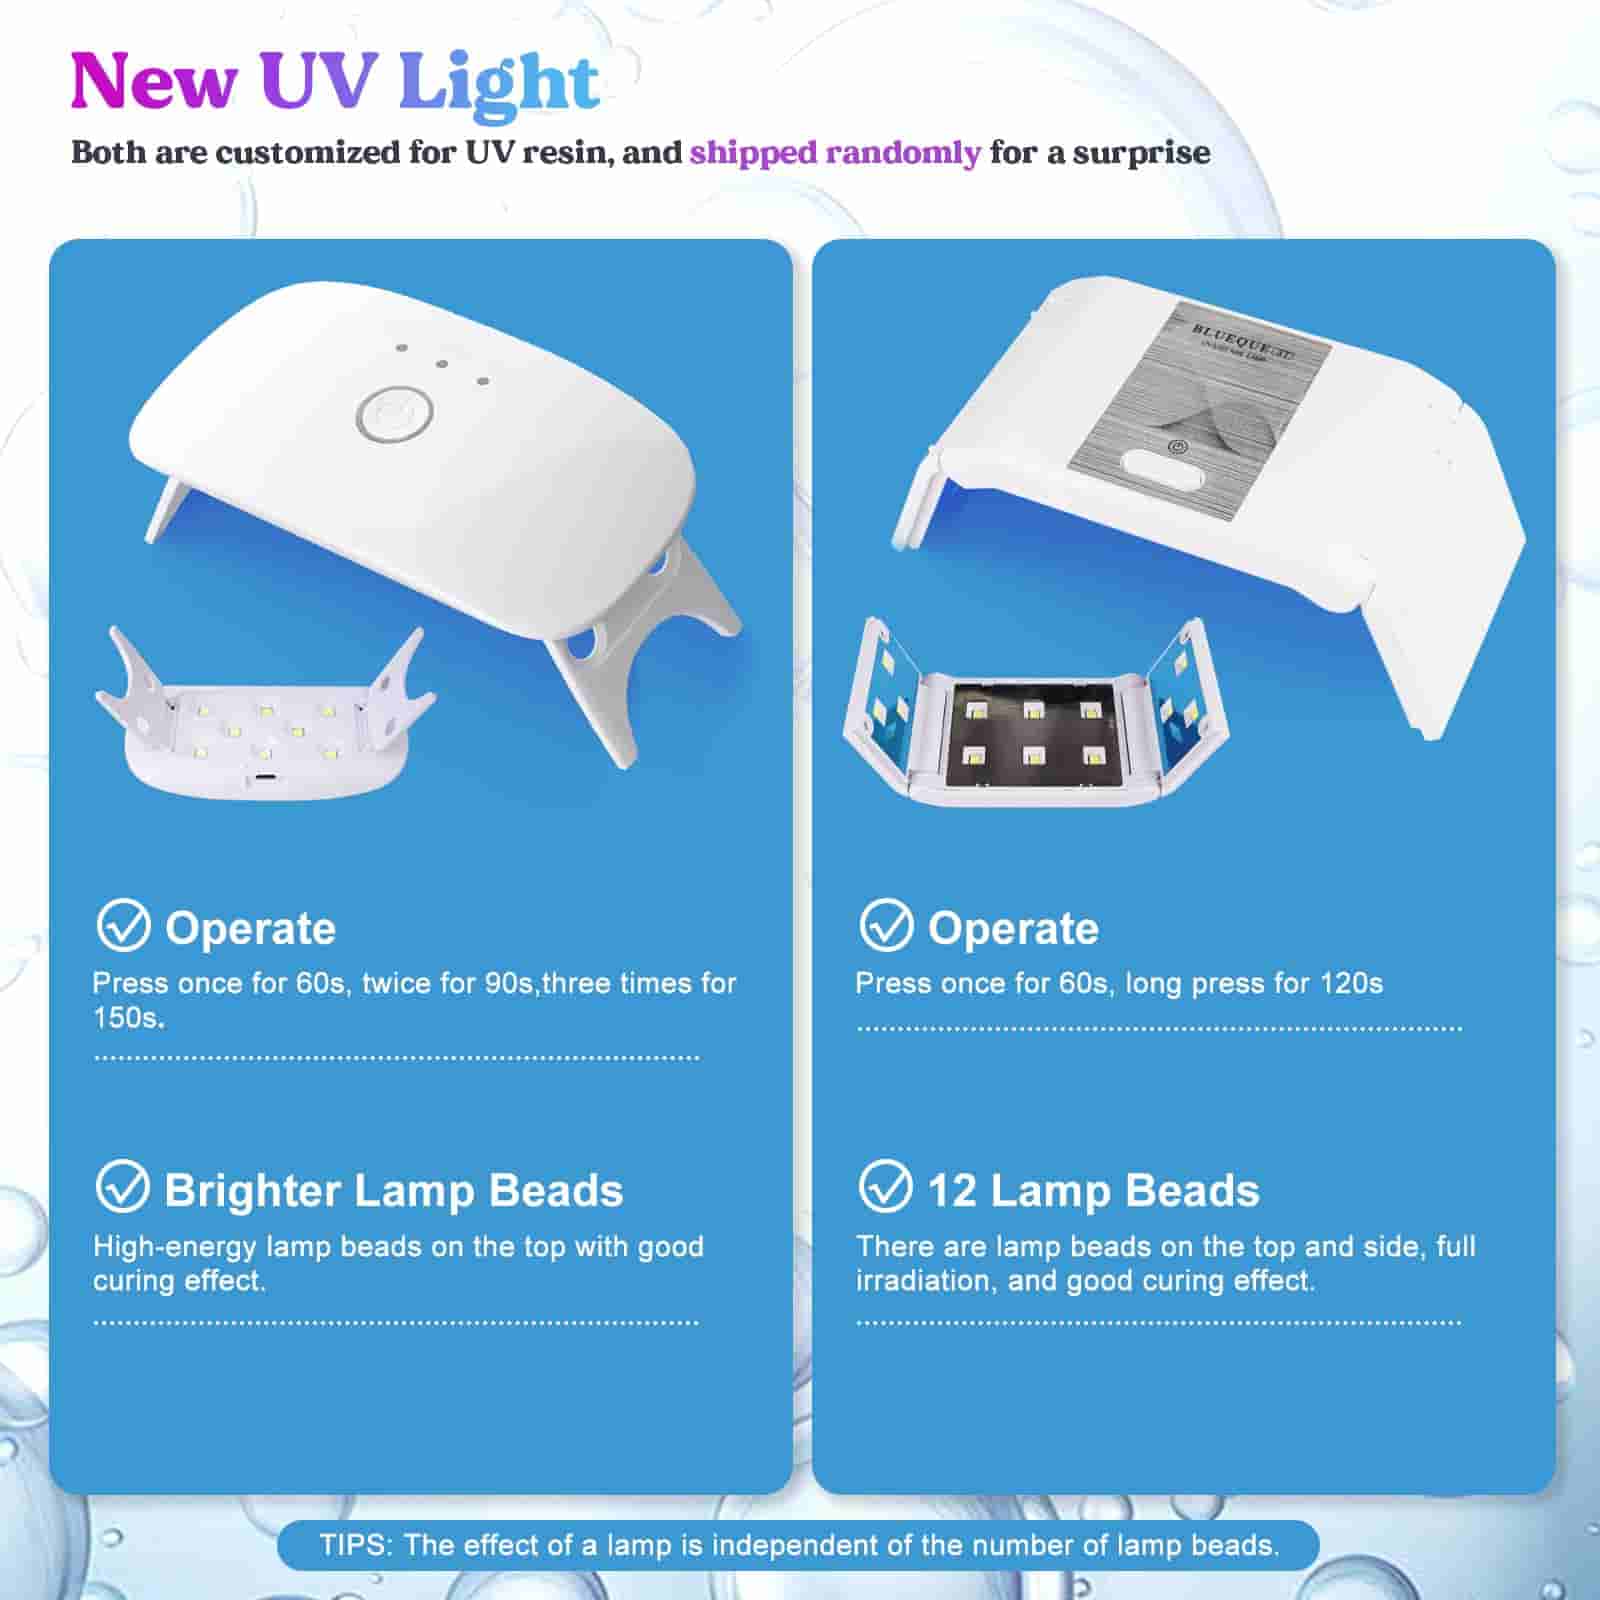 Pixiss UV Resin, Resin Tape & UV Mini Light with Free Accessories Kit